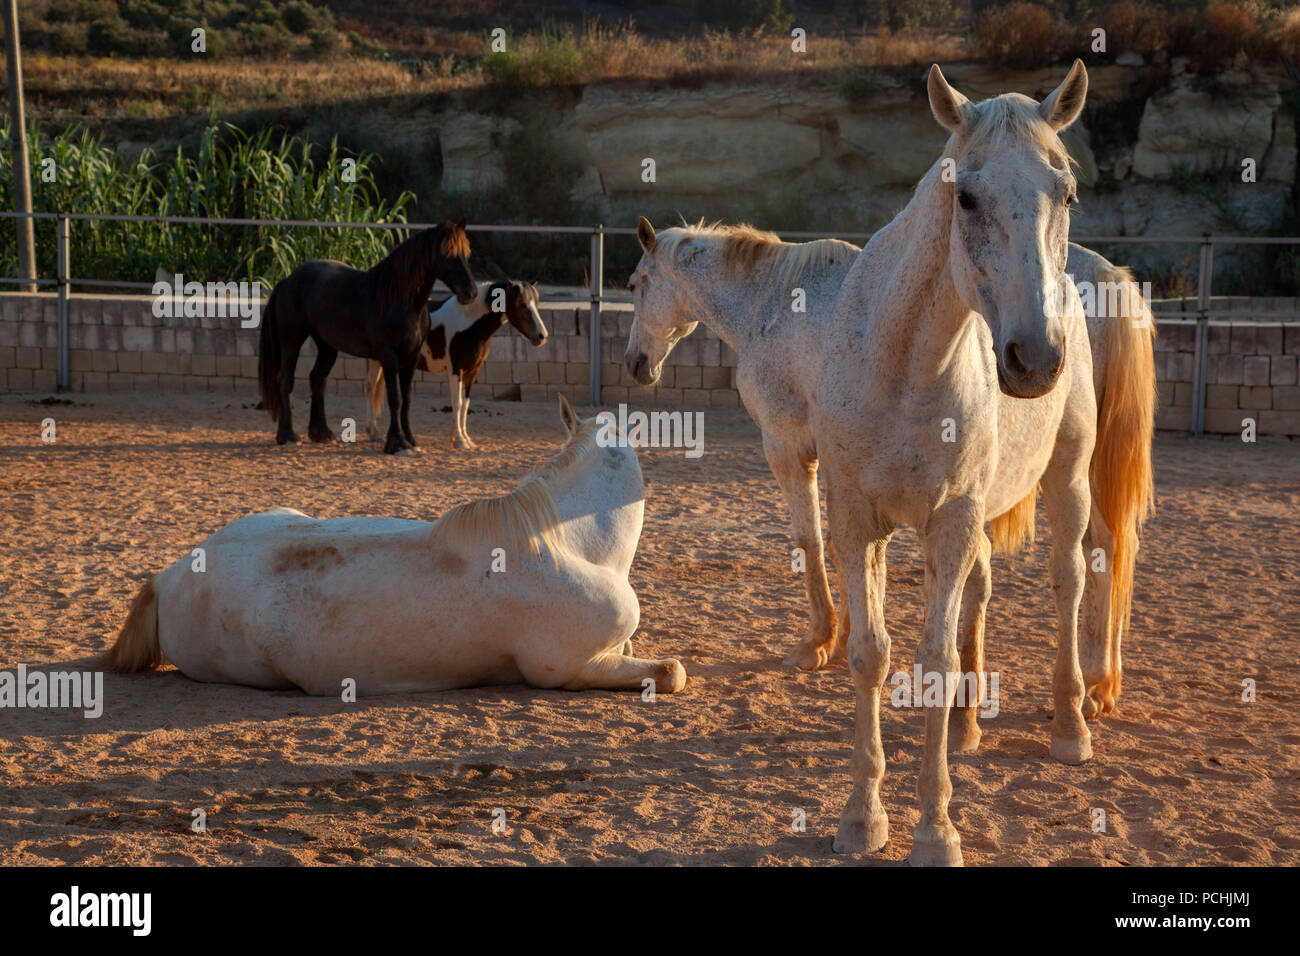 Horses hang around still drowsy and lethargic at sunrise at a horse farm. Stock Photo